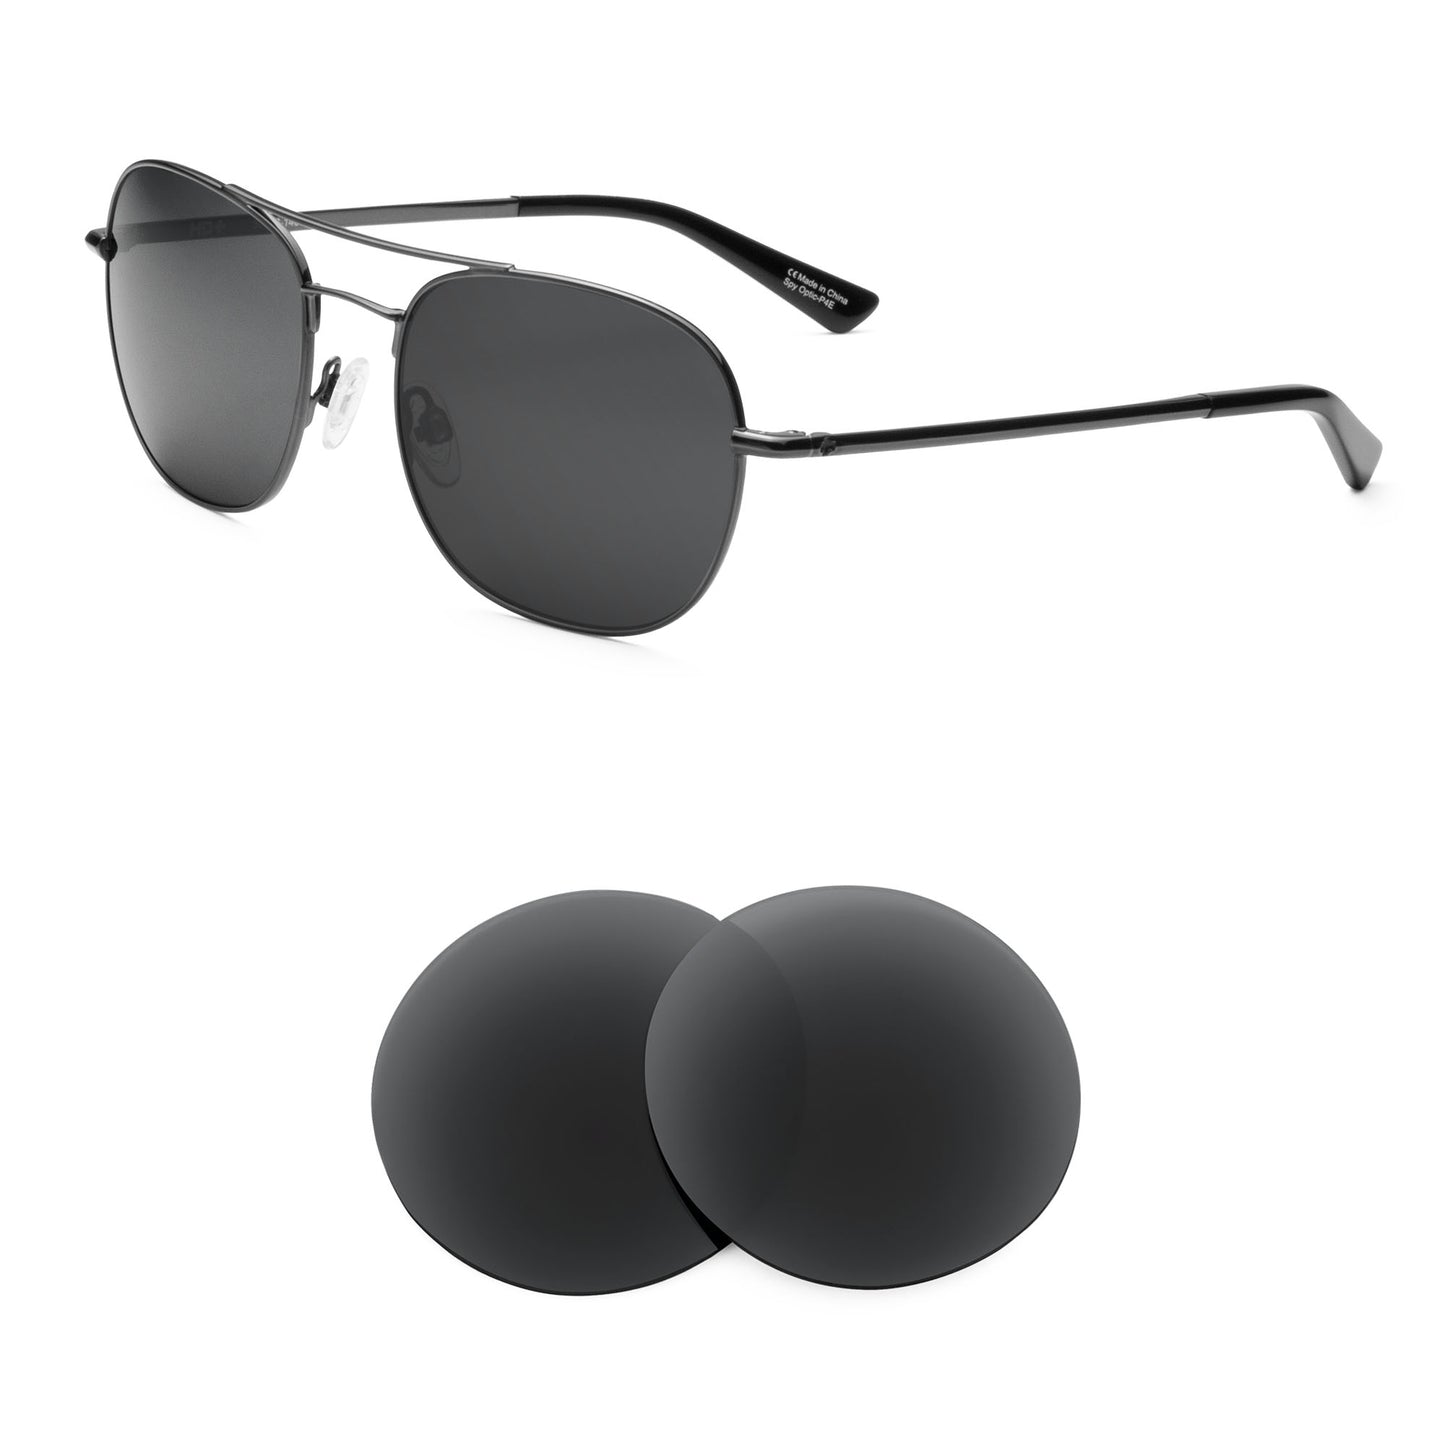 Spy Optic Pemberton sunglasses with replacement lenses